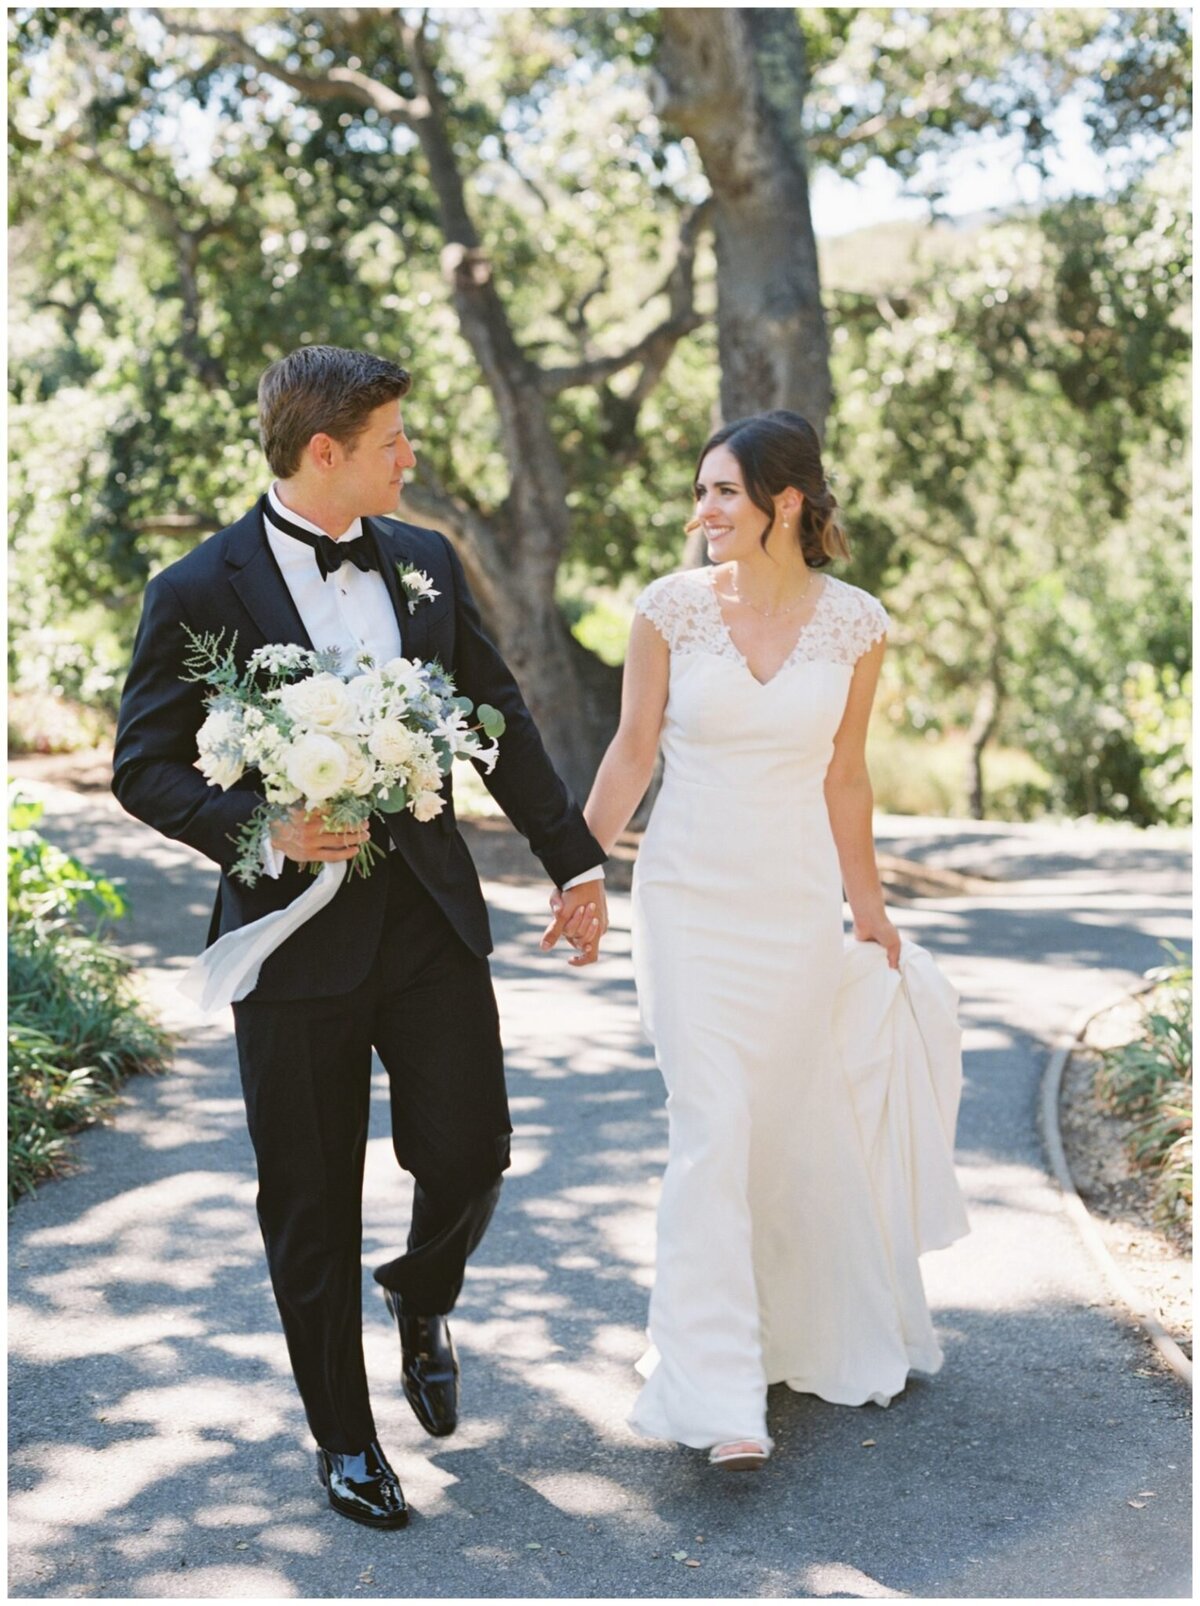 Katie-Jordan-Carmel-Valley-Holman-Ranch-Wedding-Cassie-Valente-Photography-0165-1530x2048